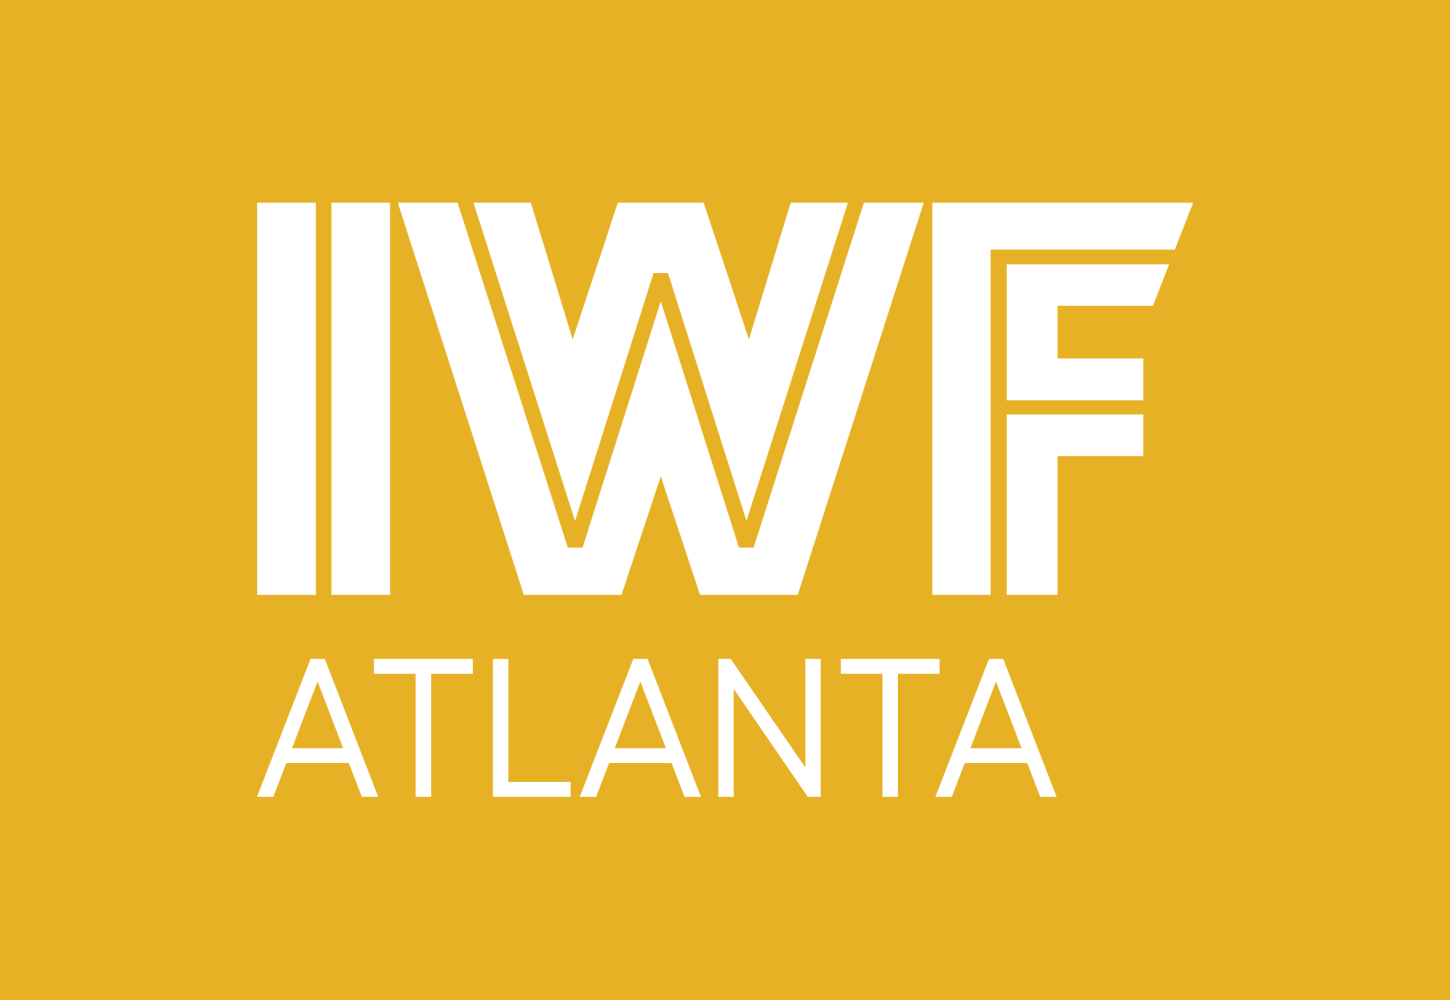 Exhibition IWF ATLANTA, August 23-26, 2022, USA